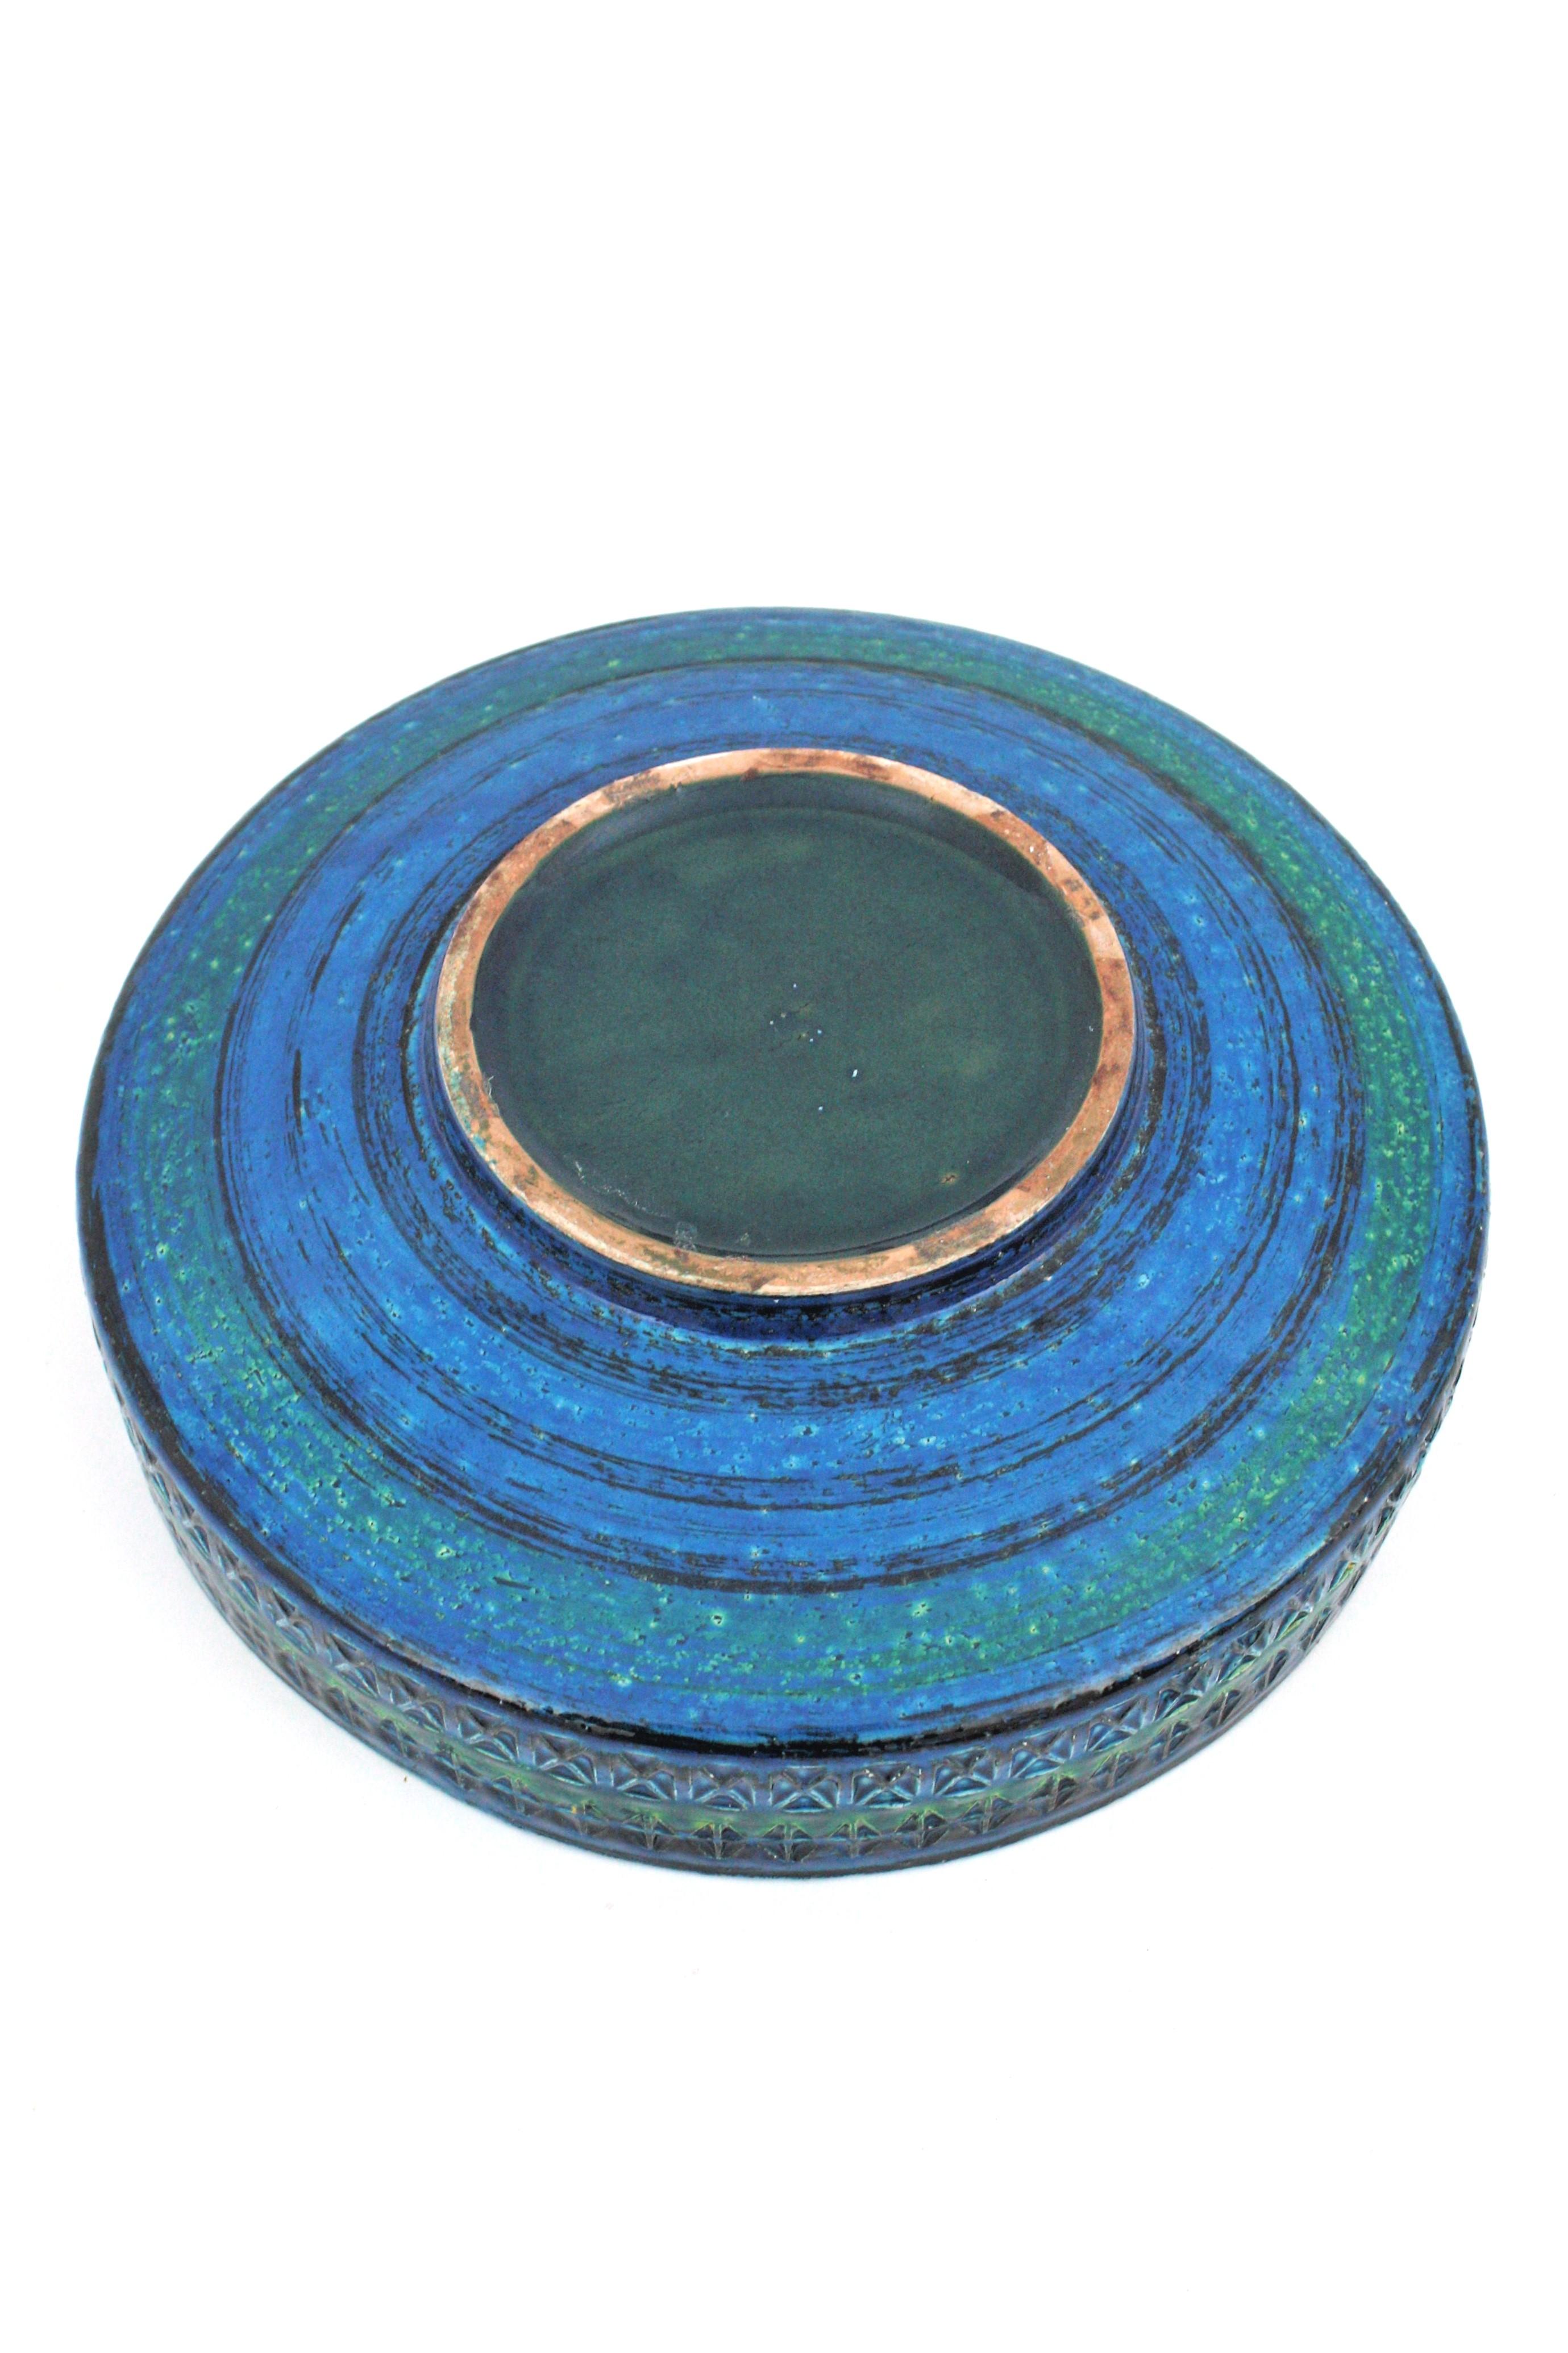 Large Aldo Londi Bitossi Rimini Blue Glazed Ceramic Centerpiece Bowl, 1950s For Sale 4